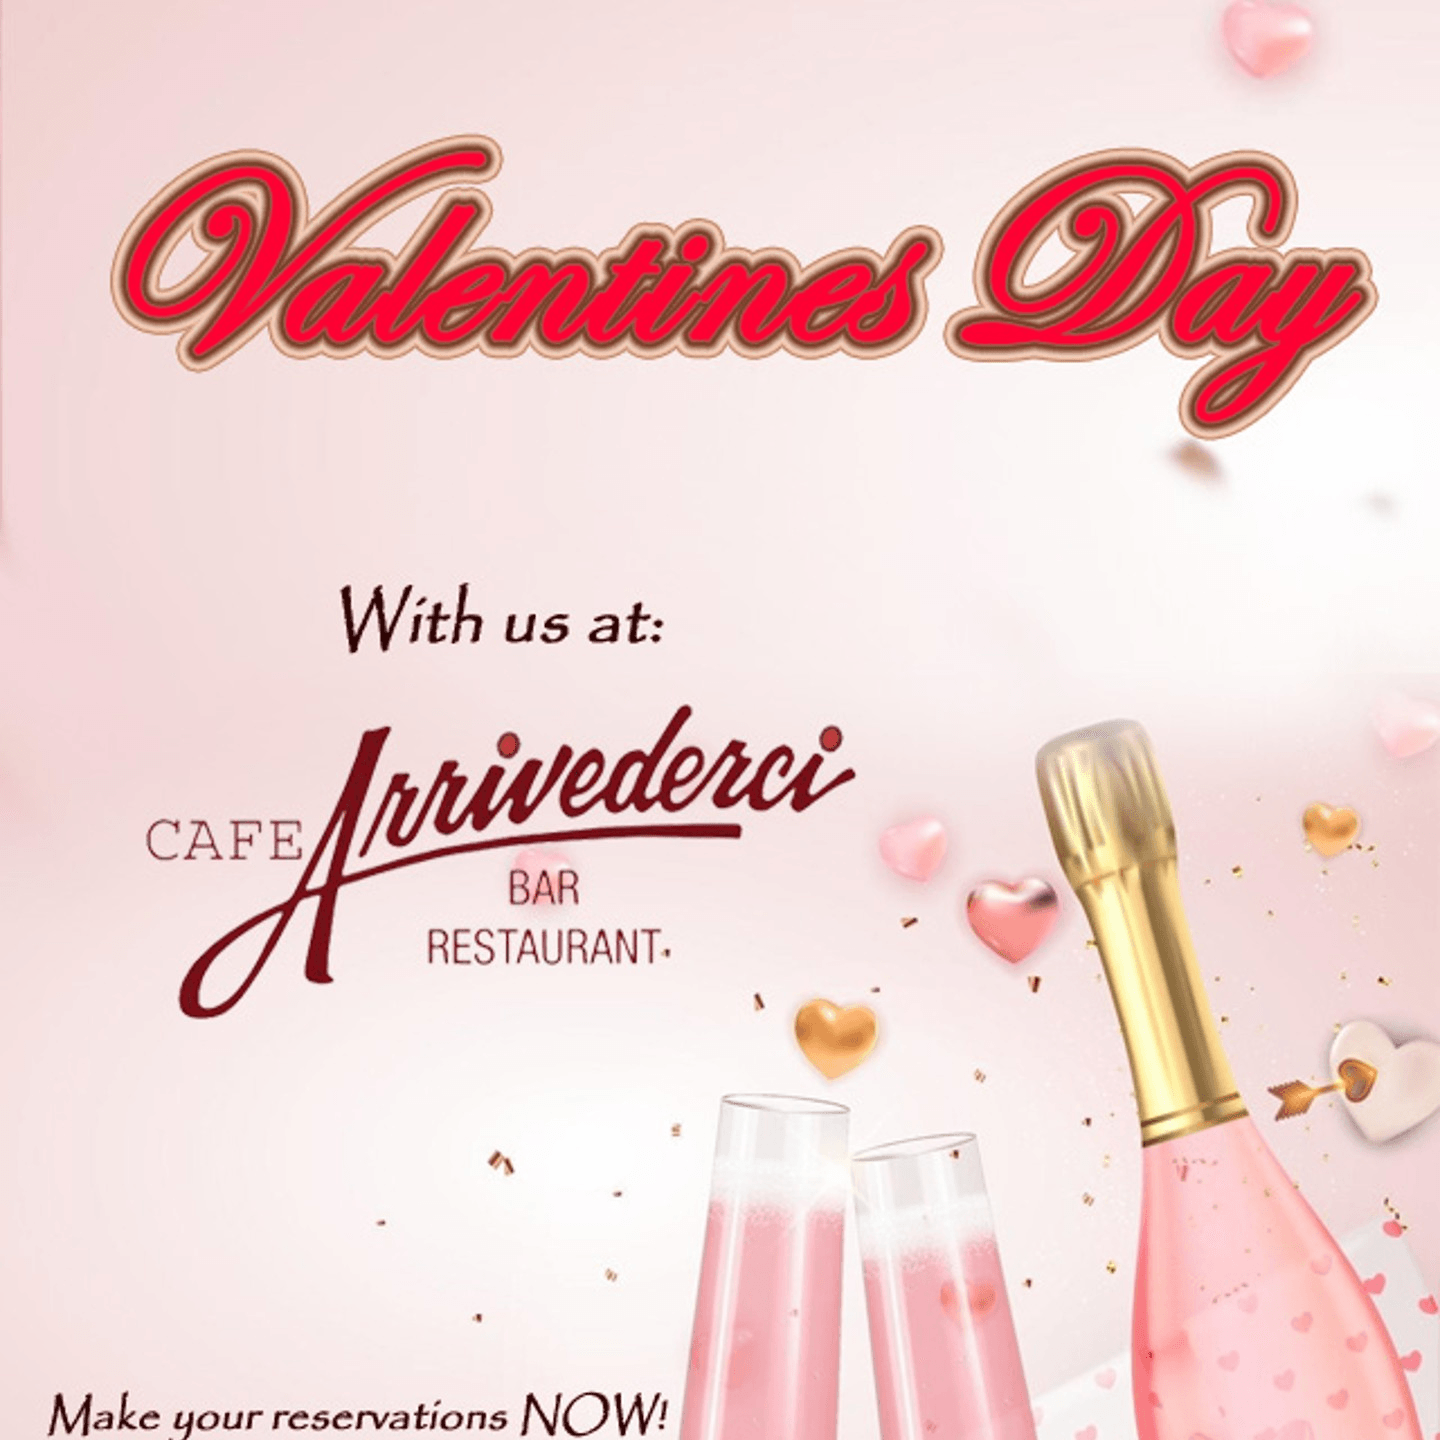 Celebrate Valentine's with Arrivederci!